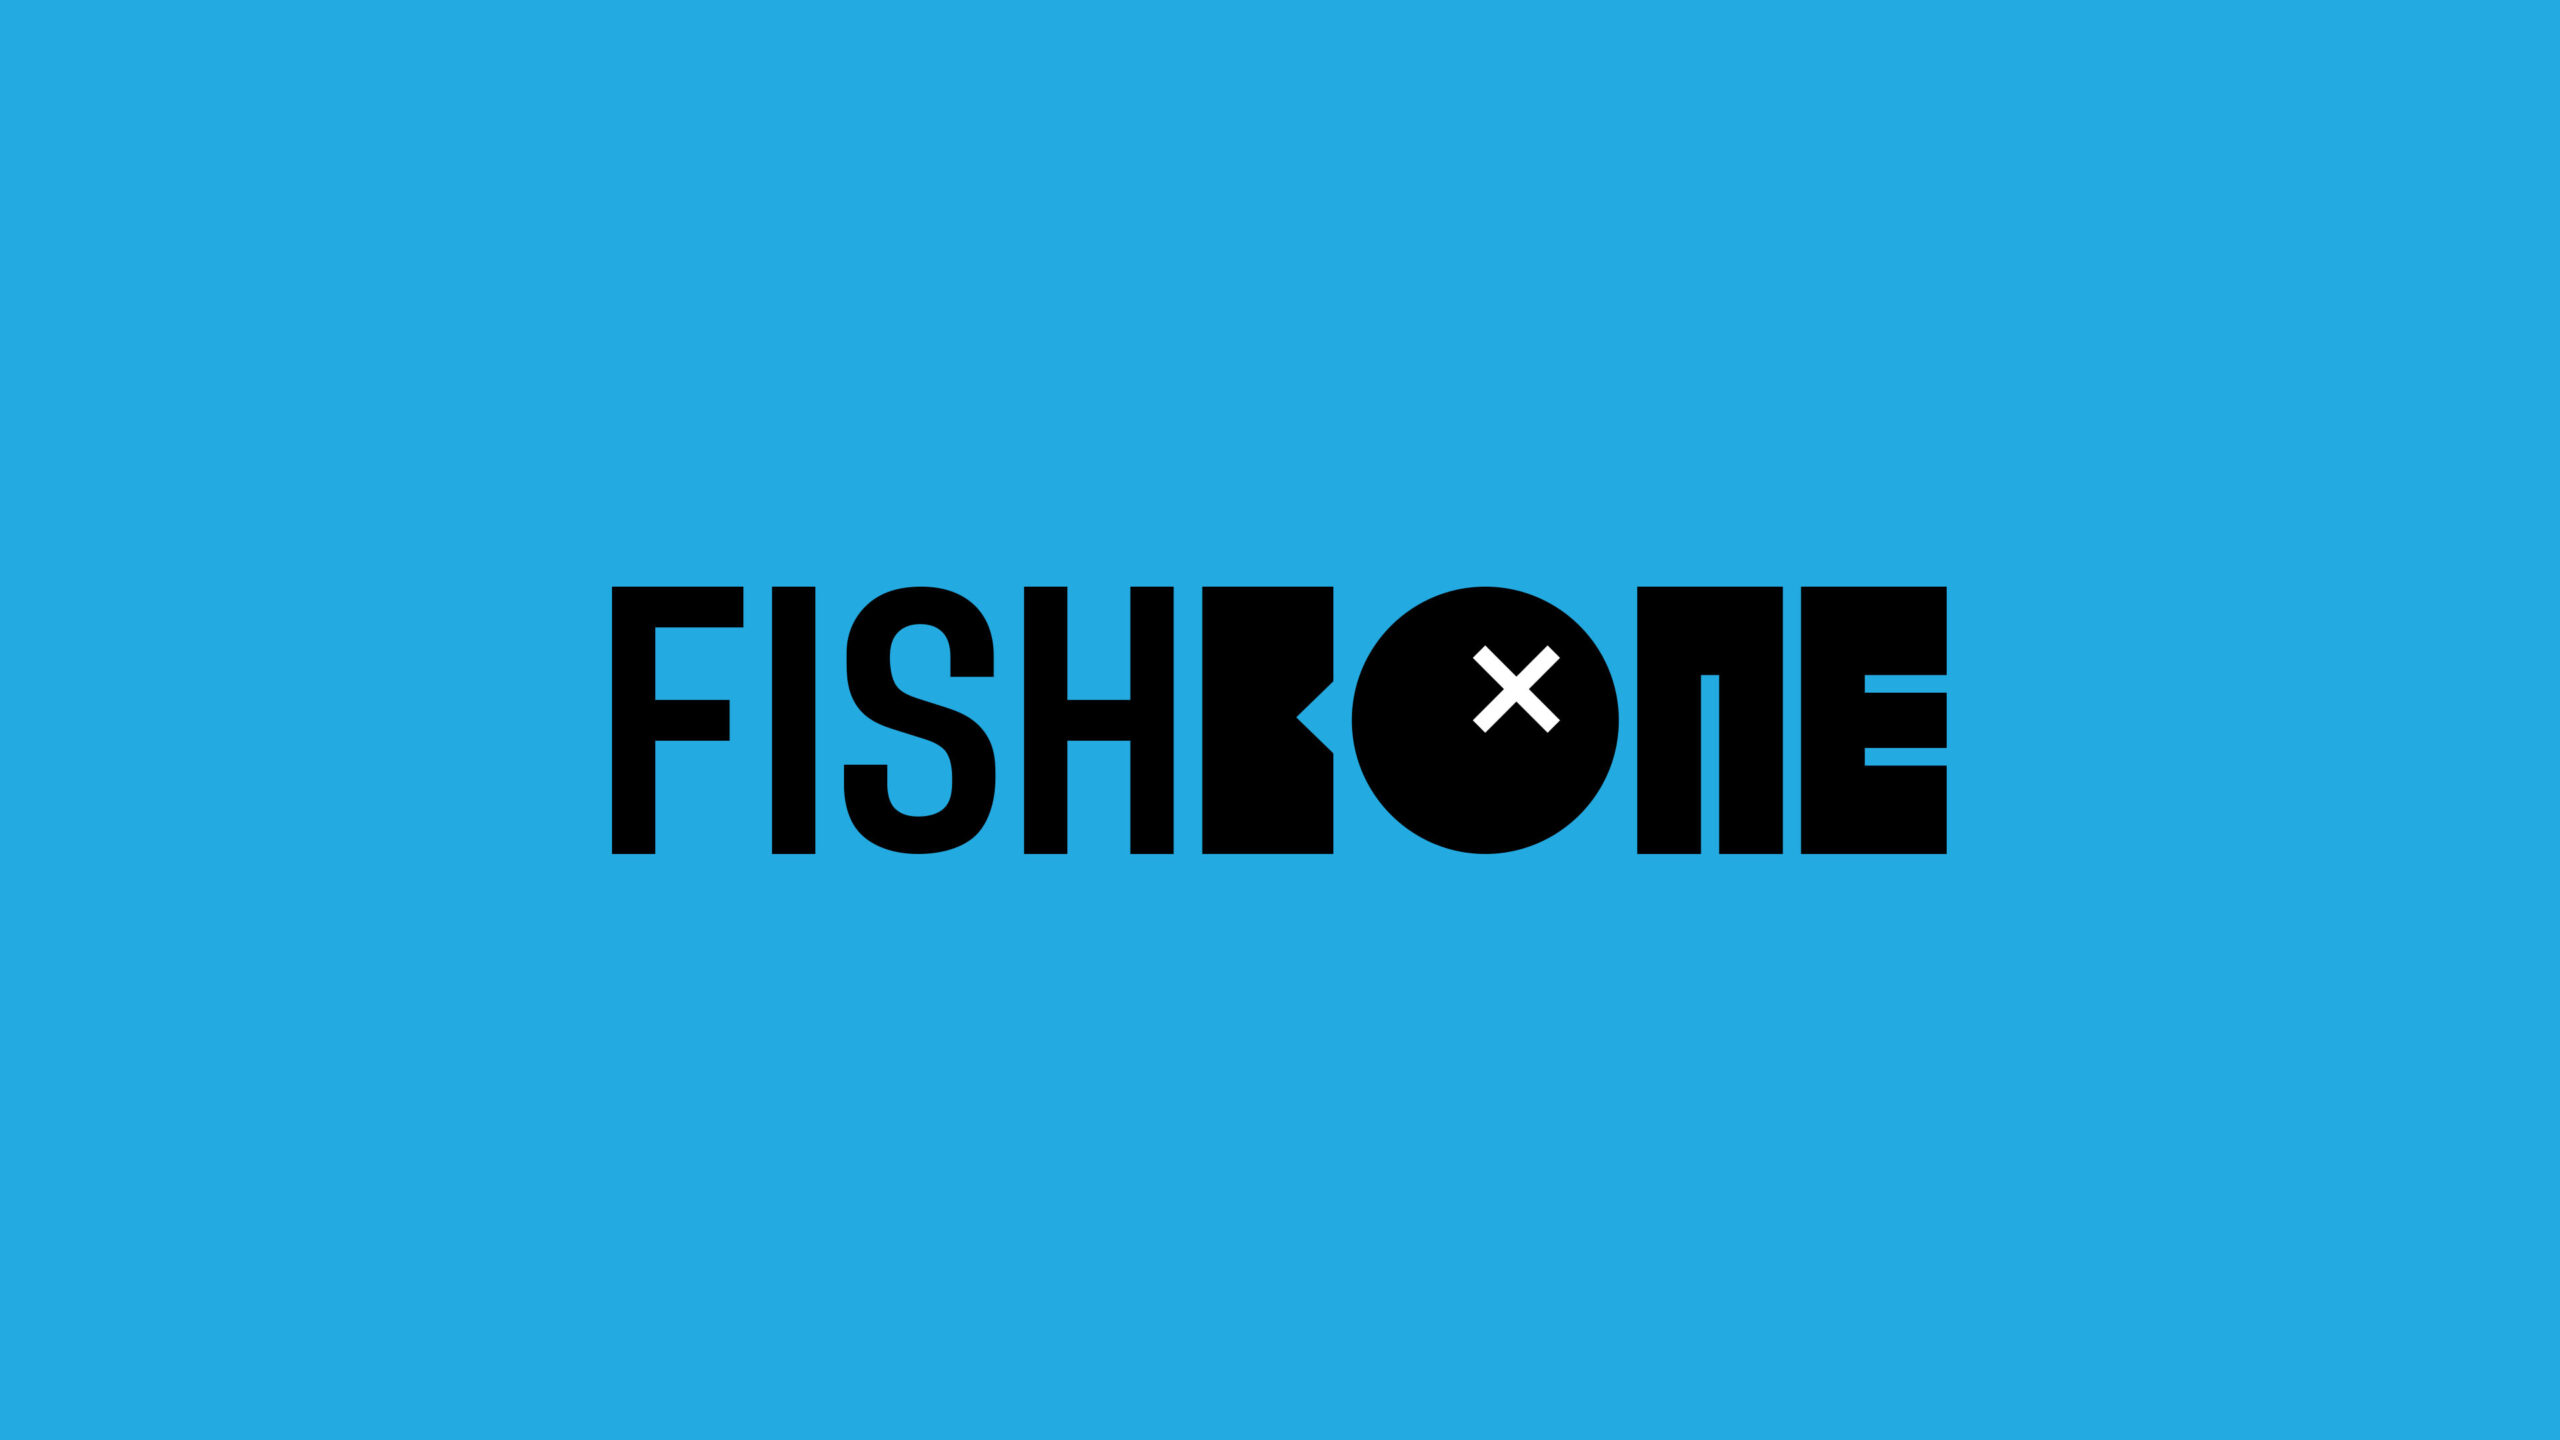 Fishbone-By-STORM-Desing-Studio-01